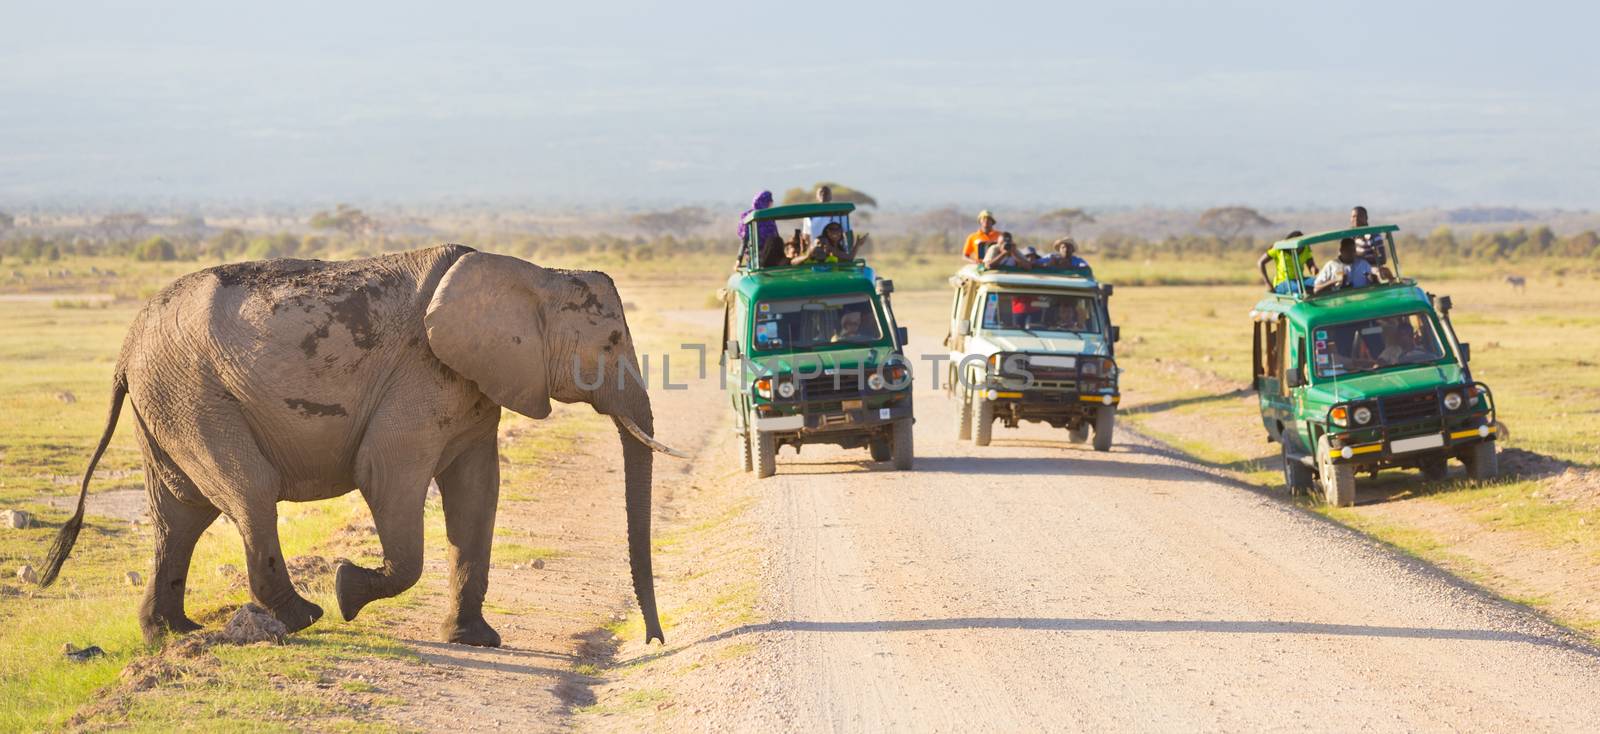 Tourists in safari jeeps watching and taking photos of big wild elephant crossing dirt roadi in Amboseli national park, Kenya. Panorama.